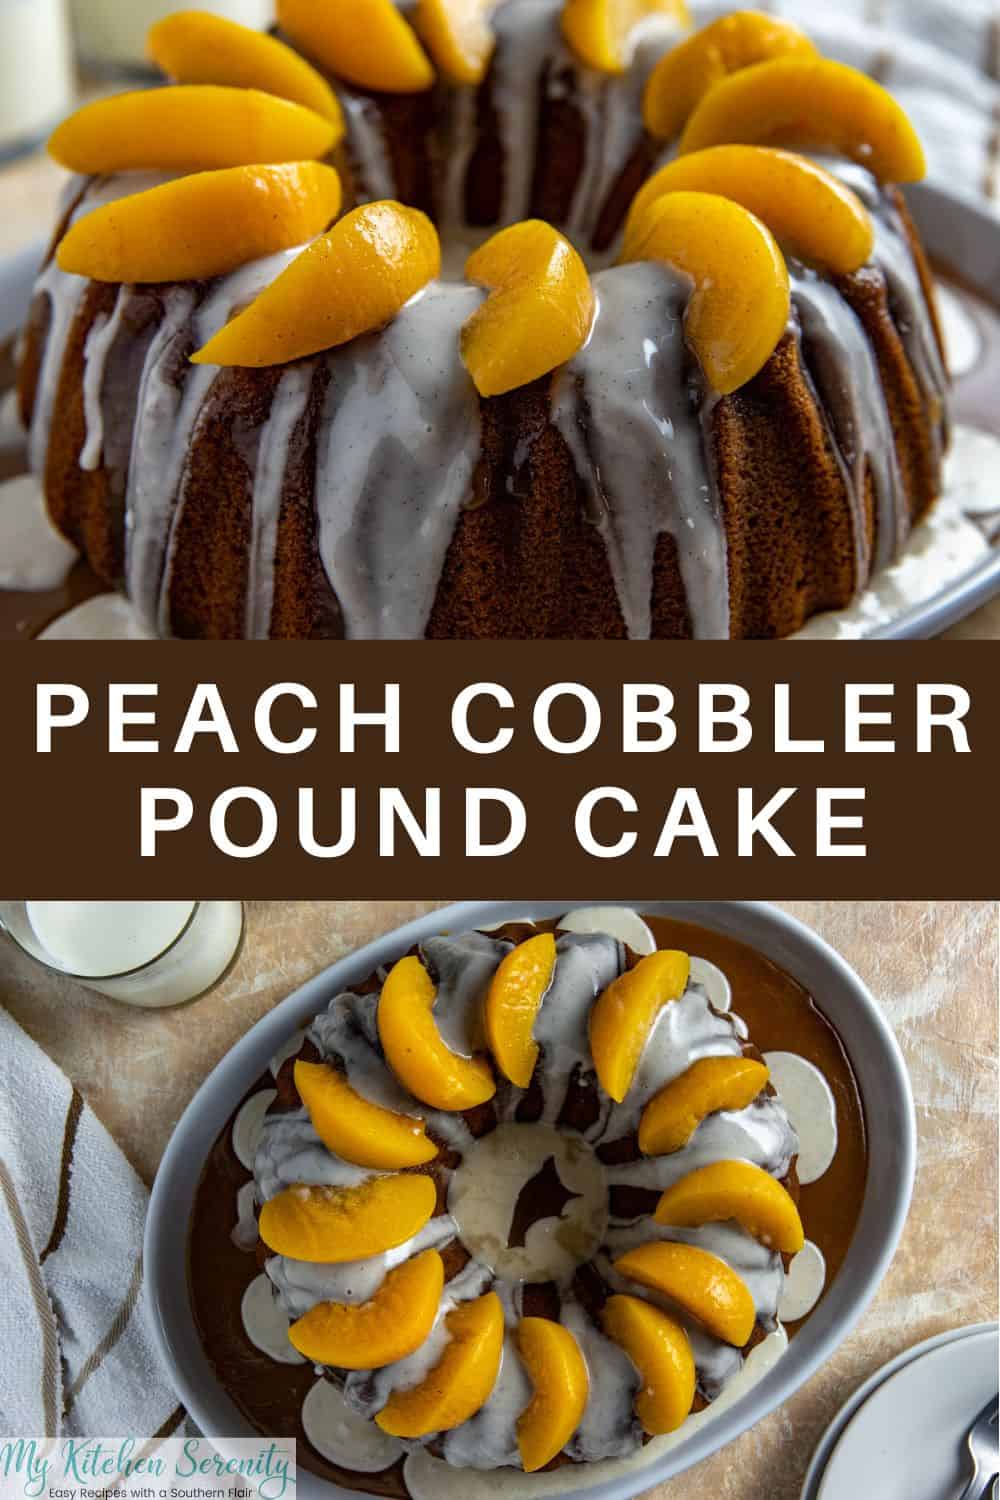 Peach Cobbler Pound Cake Image for Pinterest.